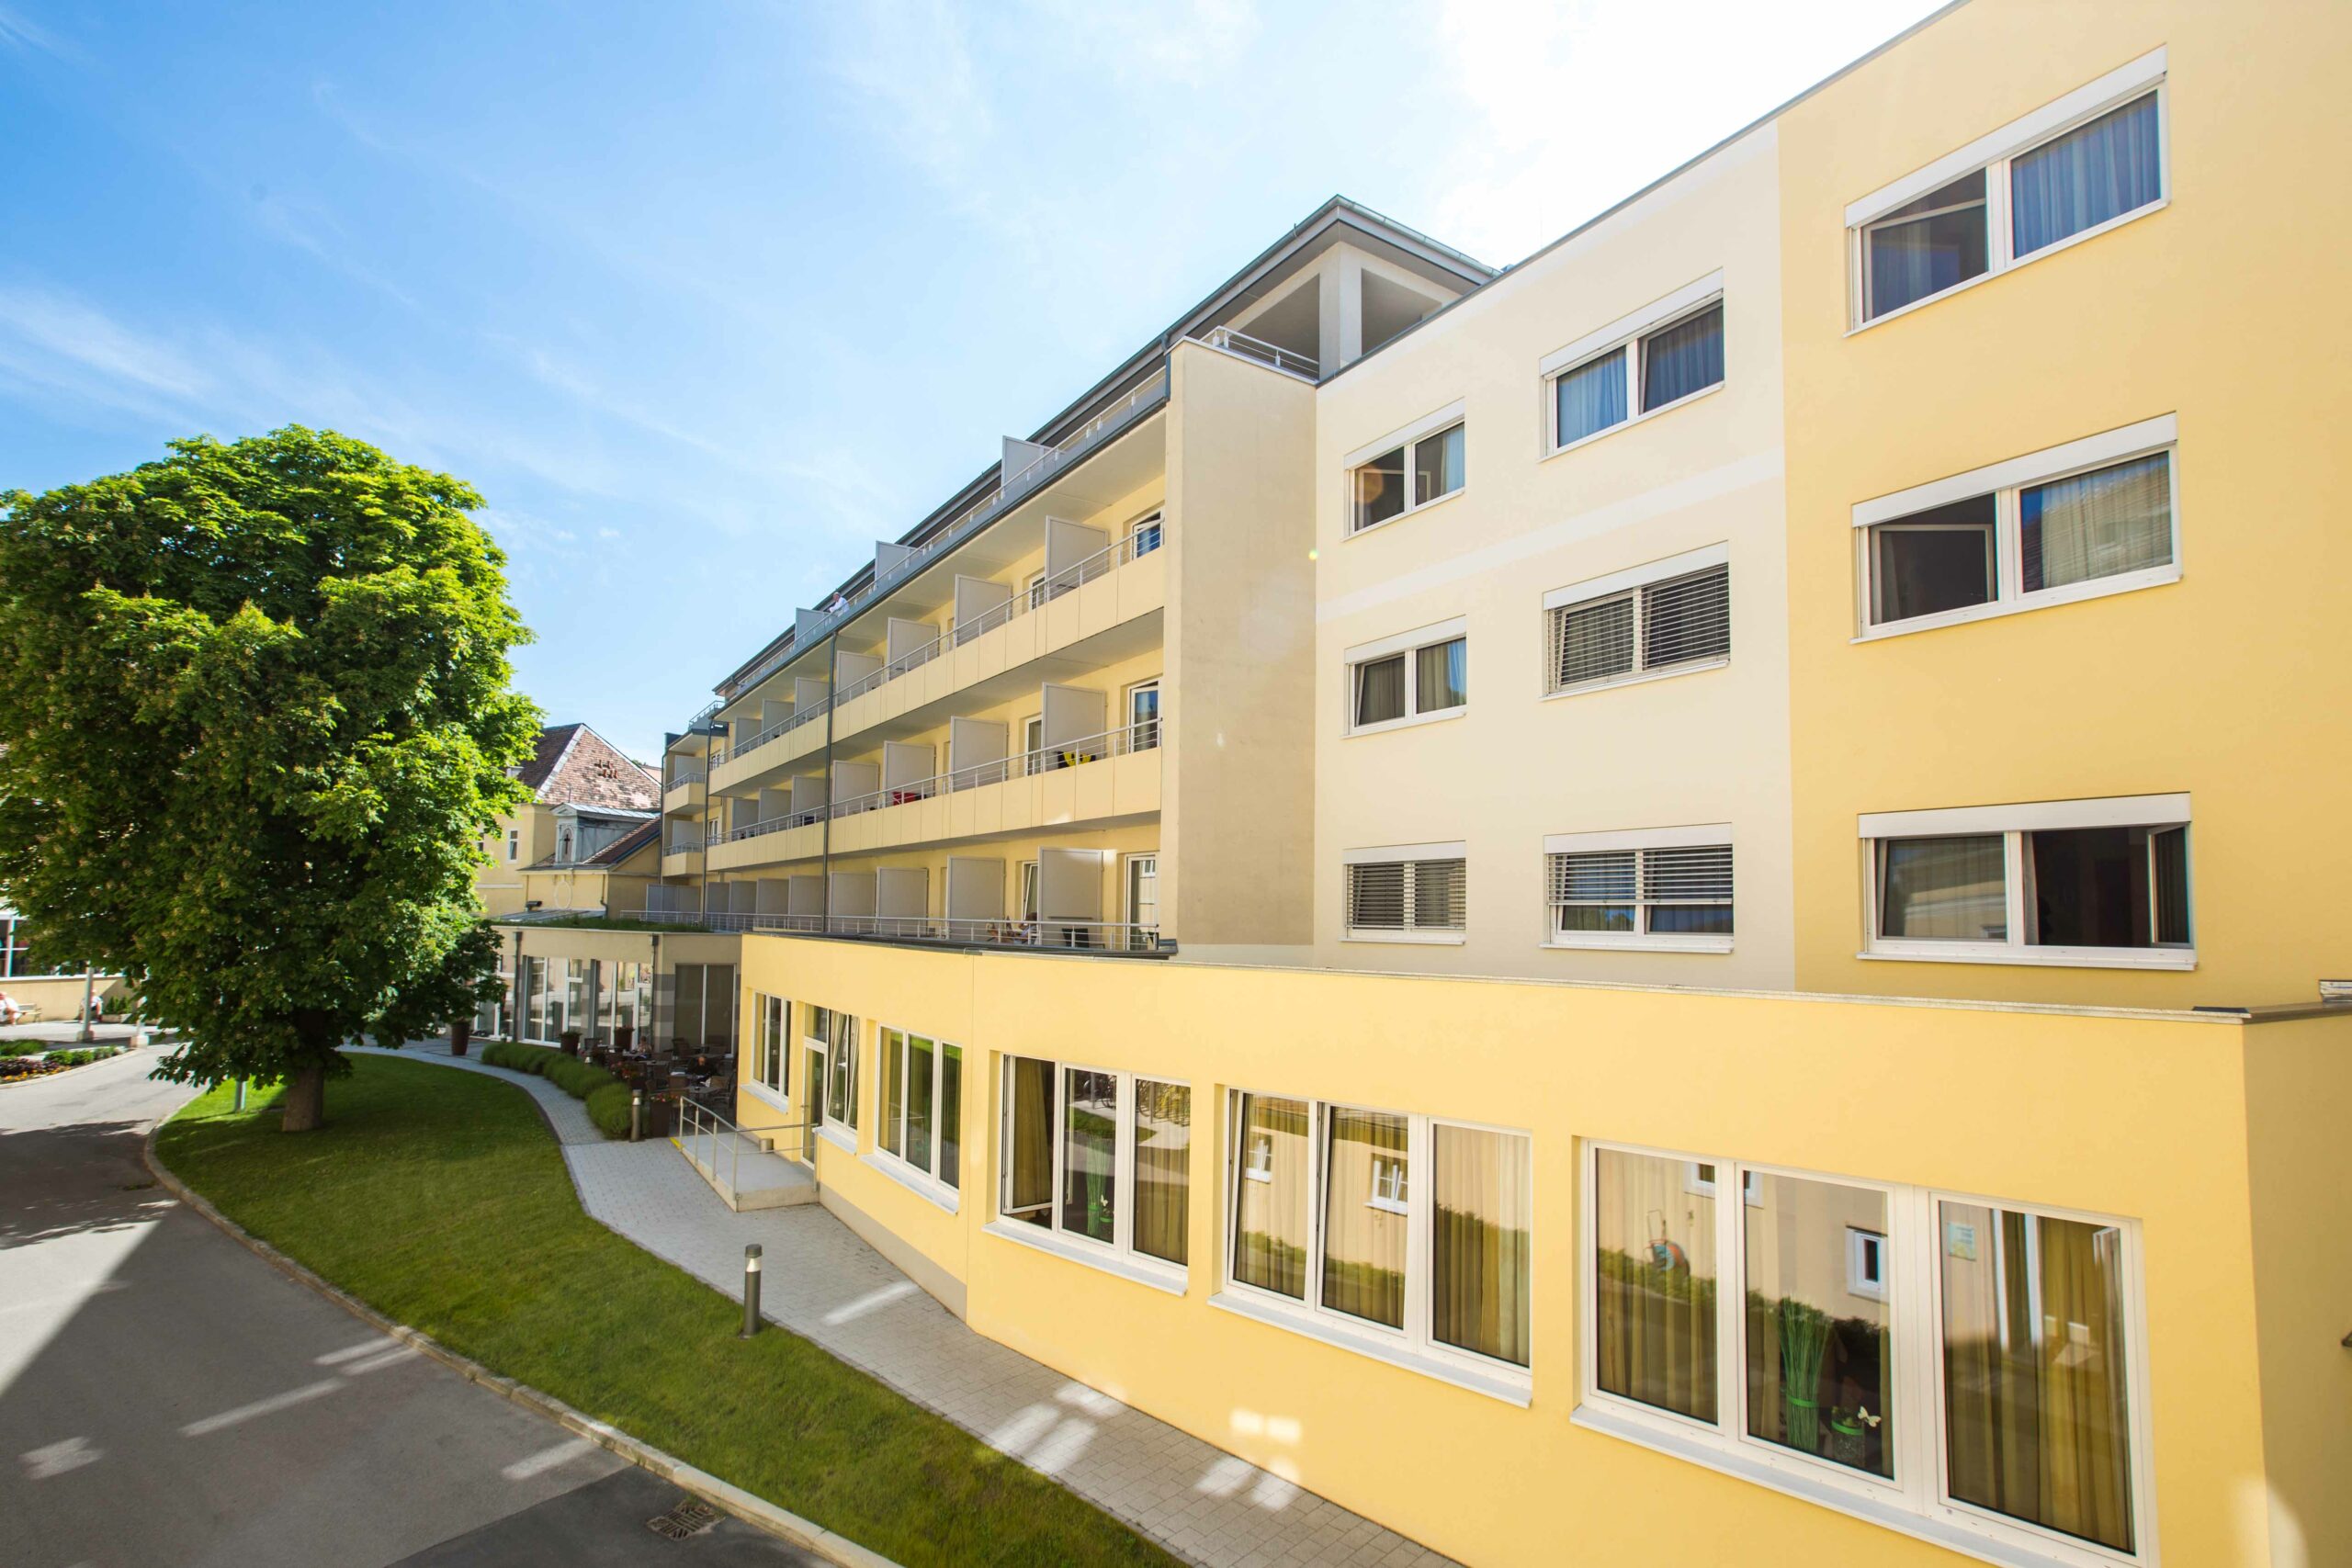 Featured Image for “Gesundheits- und Kurhotel Badener Hof”